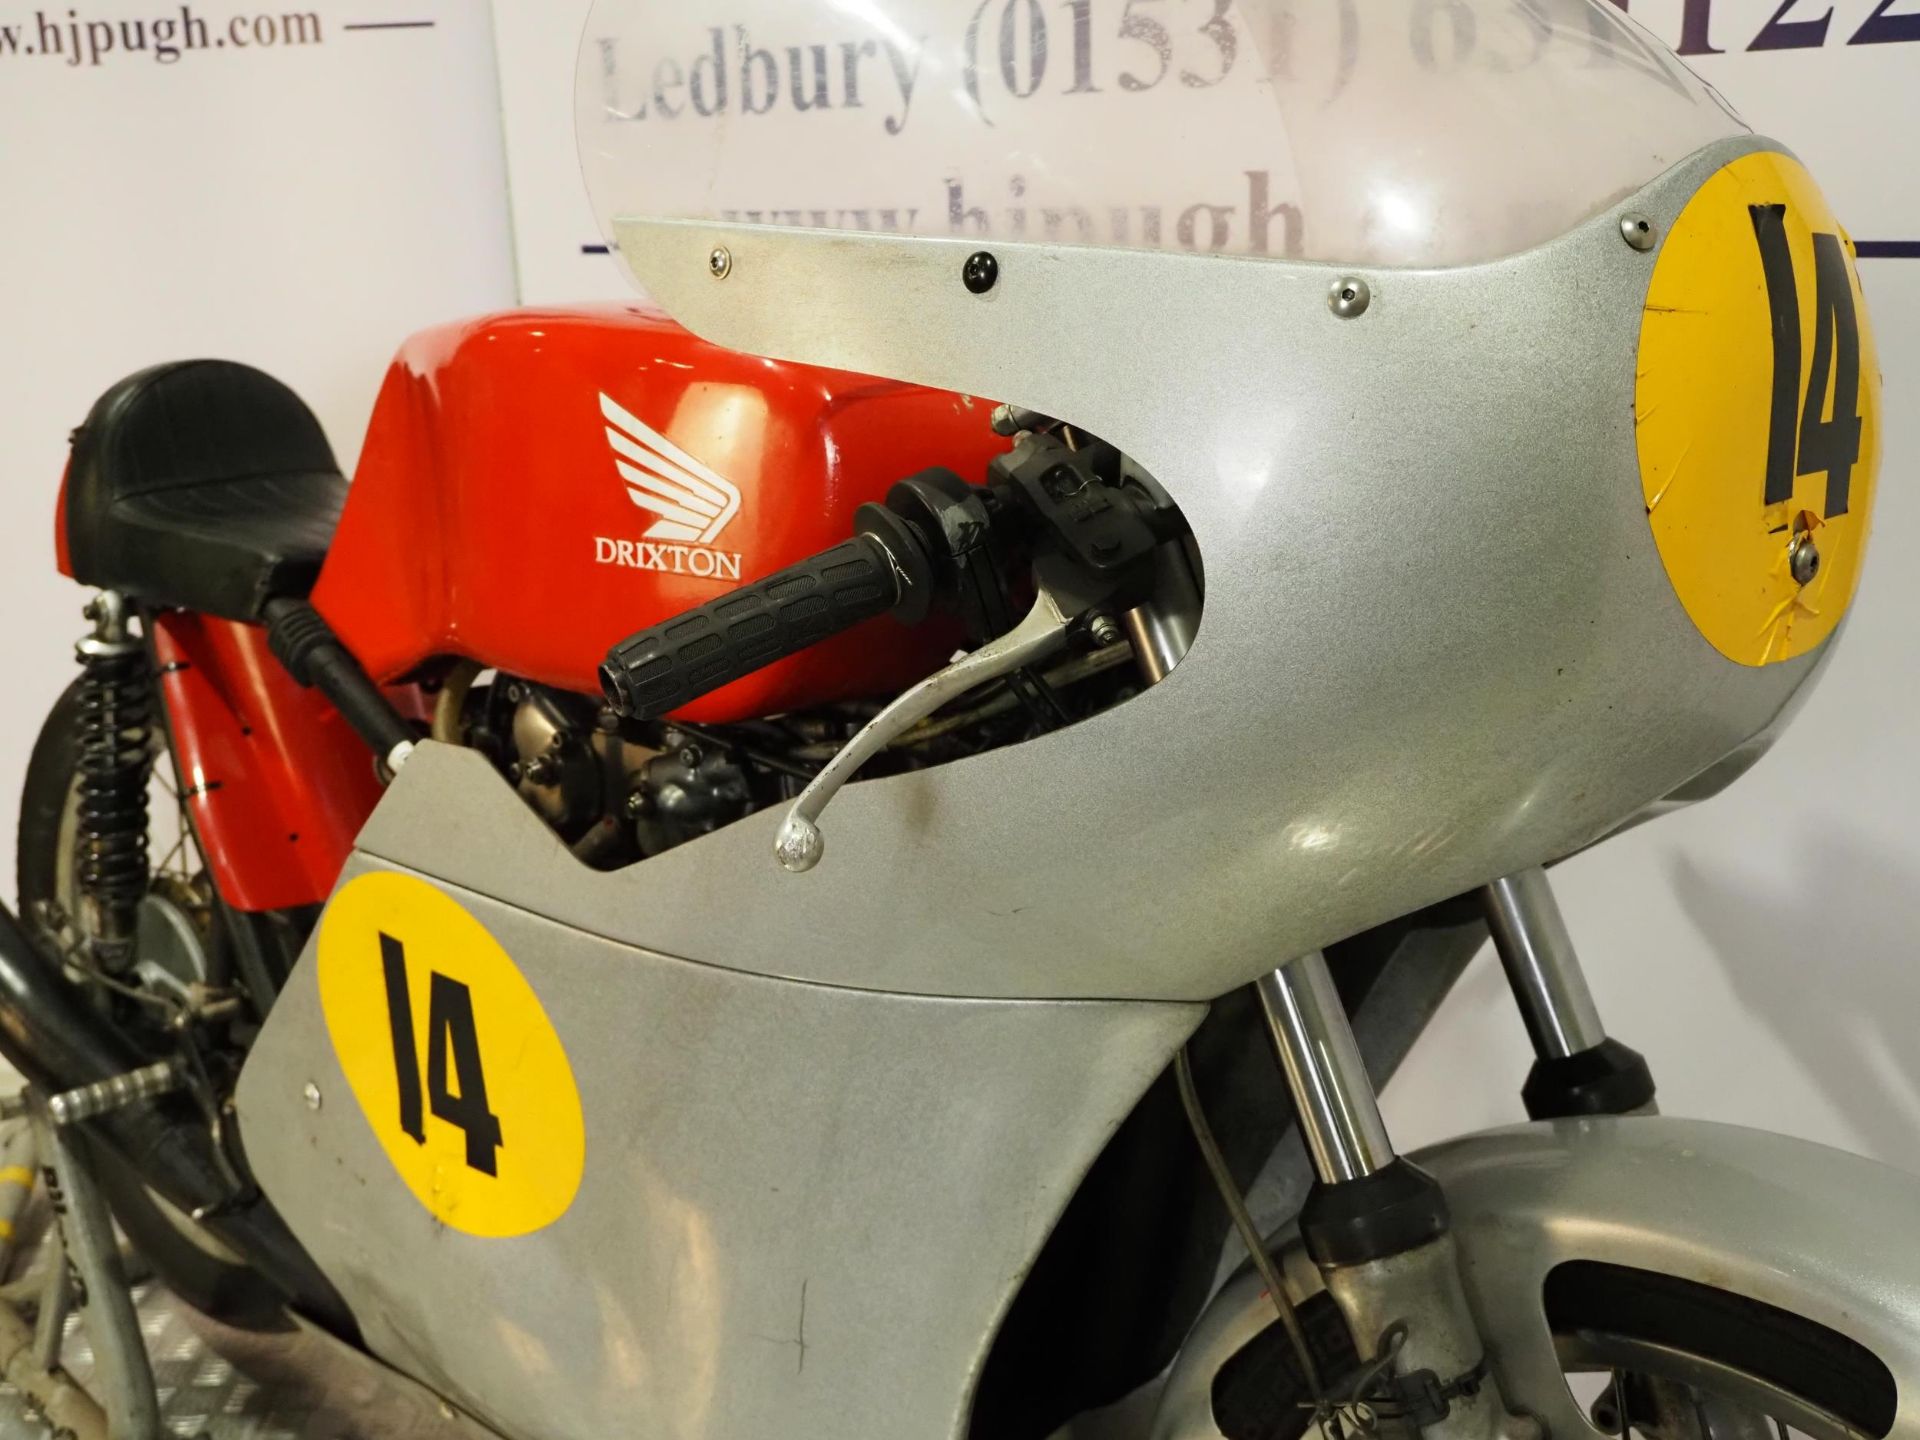 Honda Drixton CB450E race bike. 500cc. Engine No. E-3017469 Fitted with a Nova 6 speed gearbox, a - Image 6 of 8